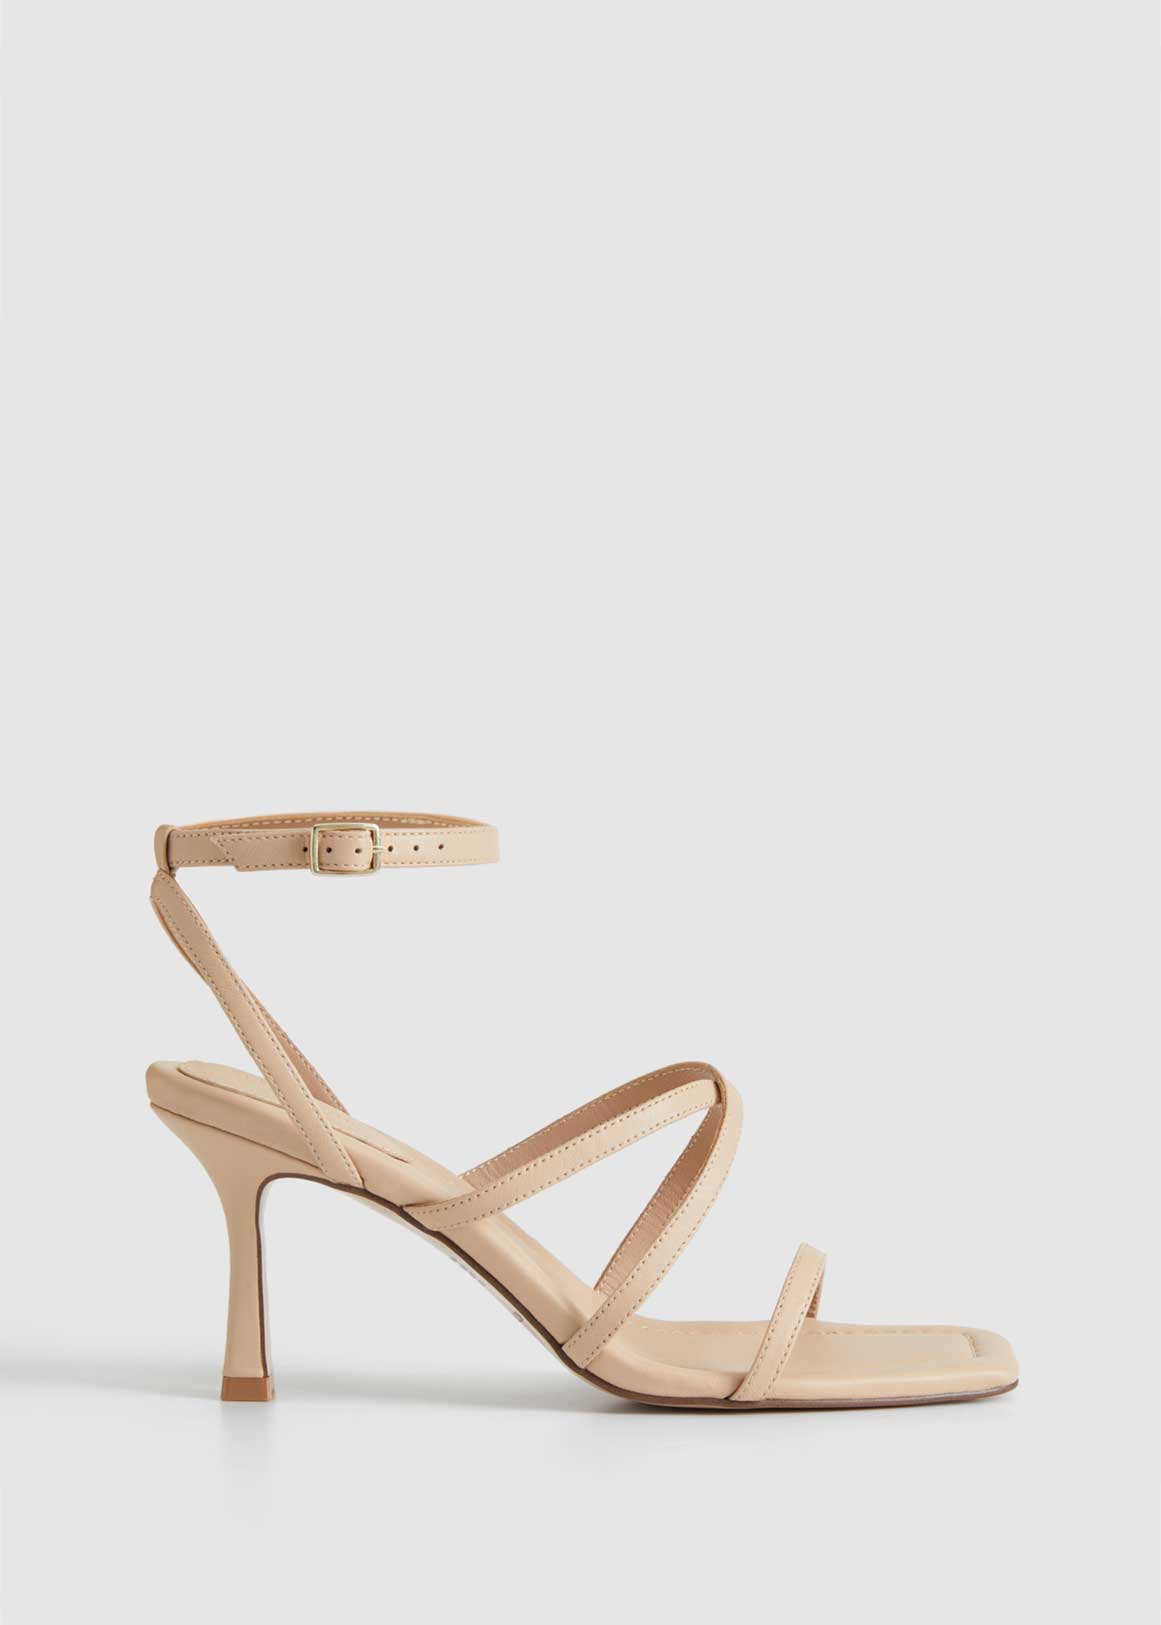 Kiara Leather Heel | Woolworths.co.za